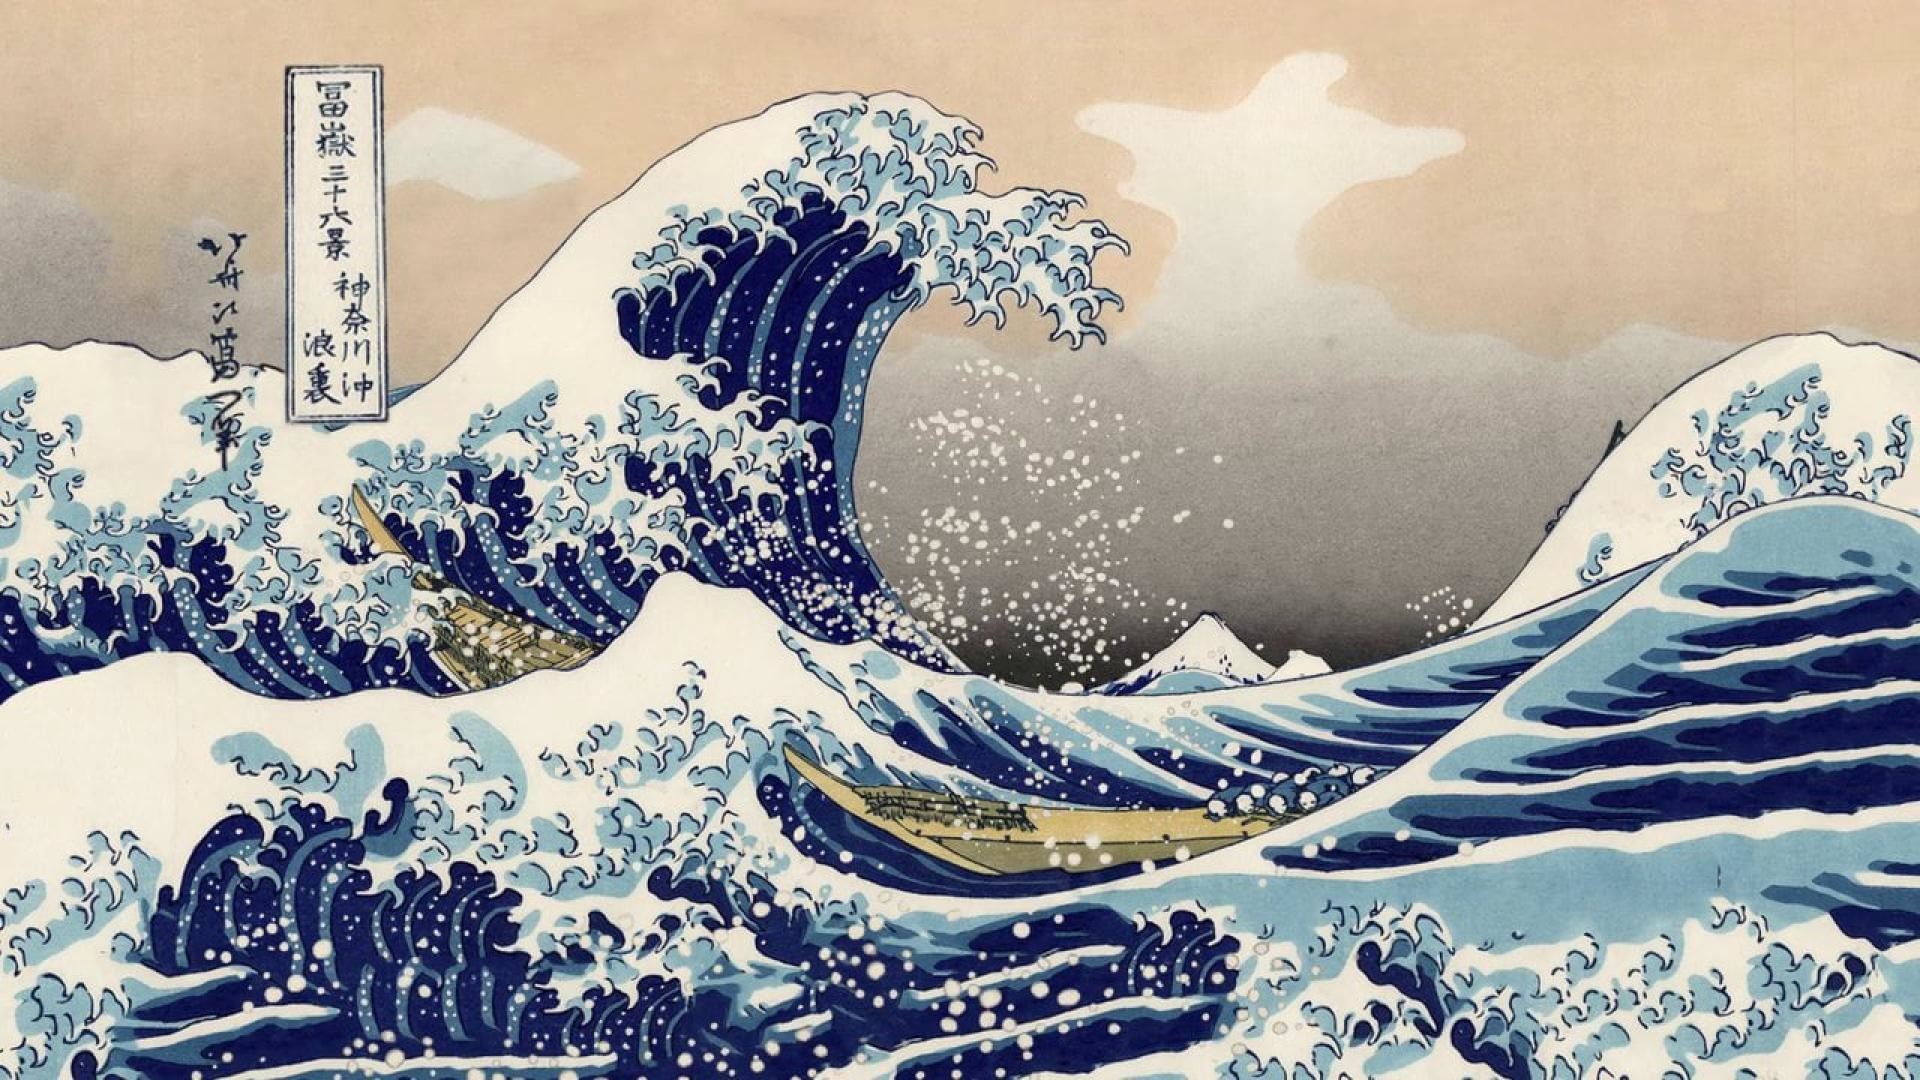 1920x1080 Great Wave Off Kanagawa Wallpaper Twx4w4h Wallimpex